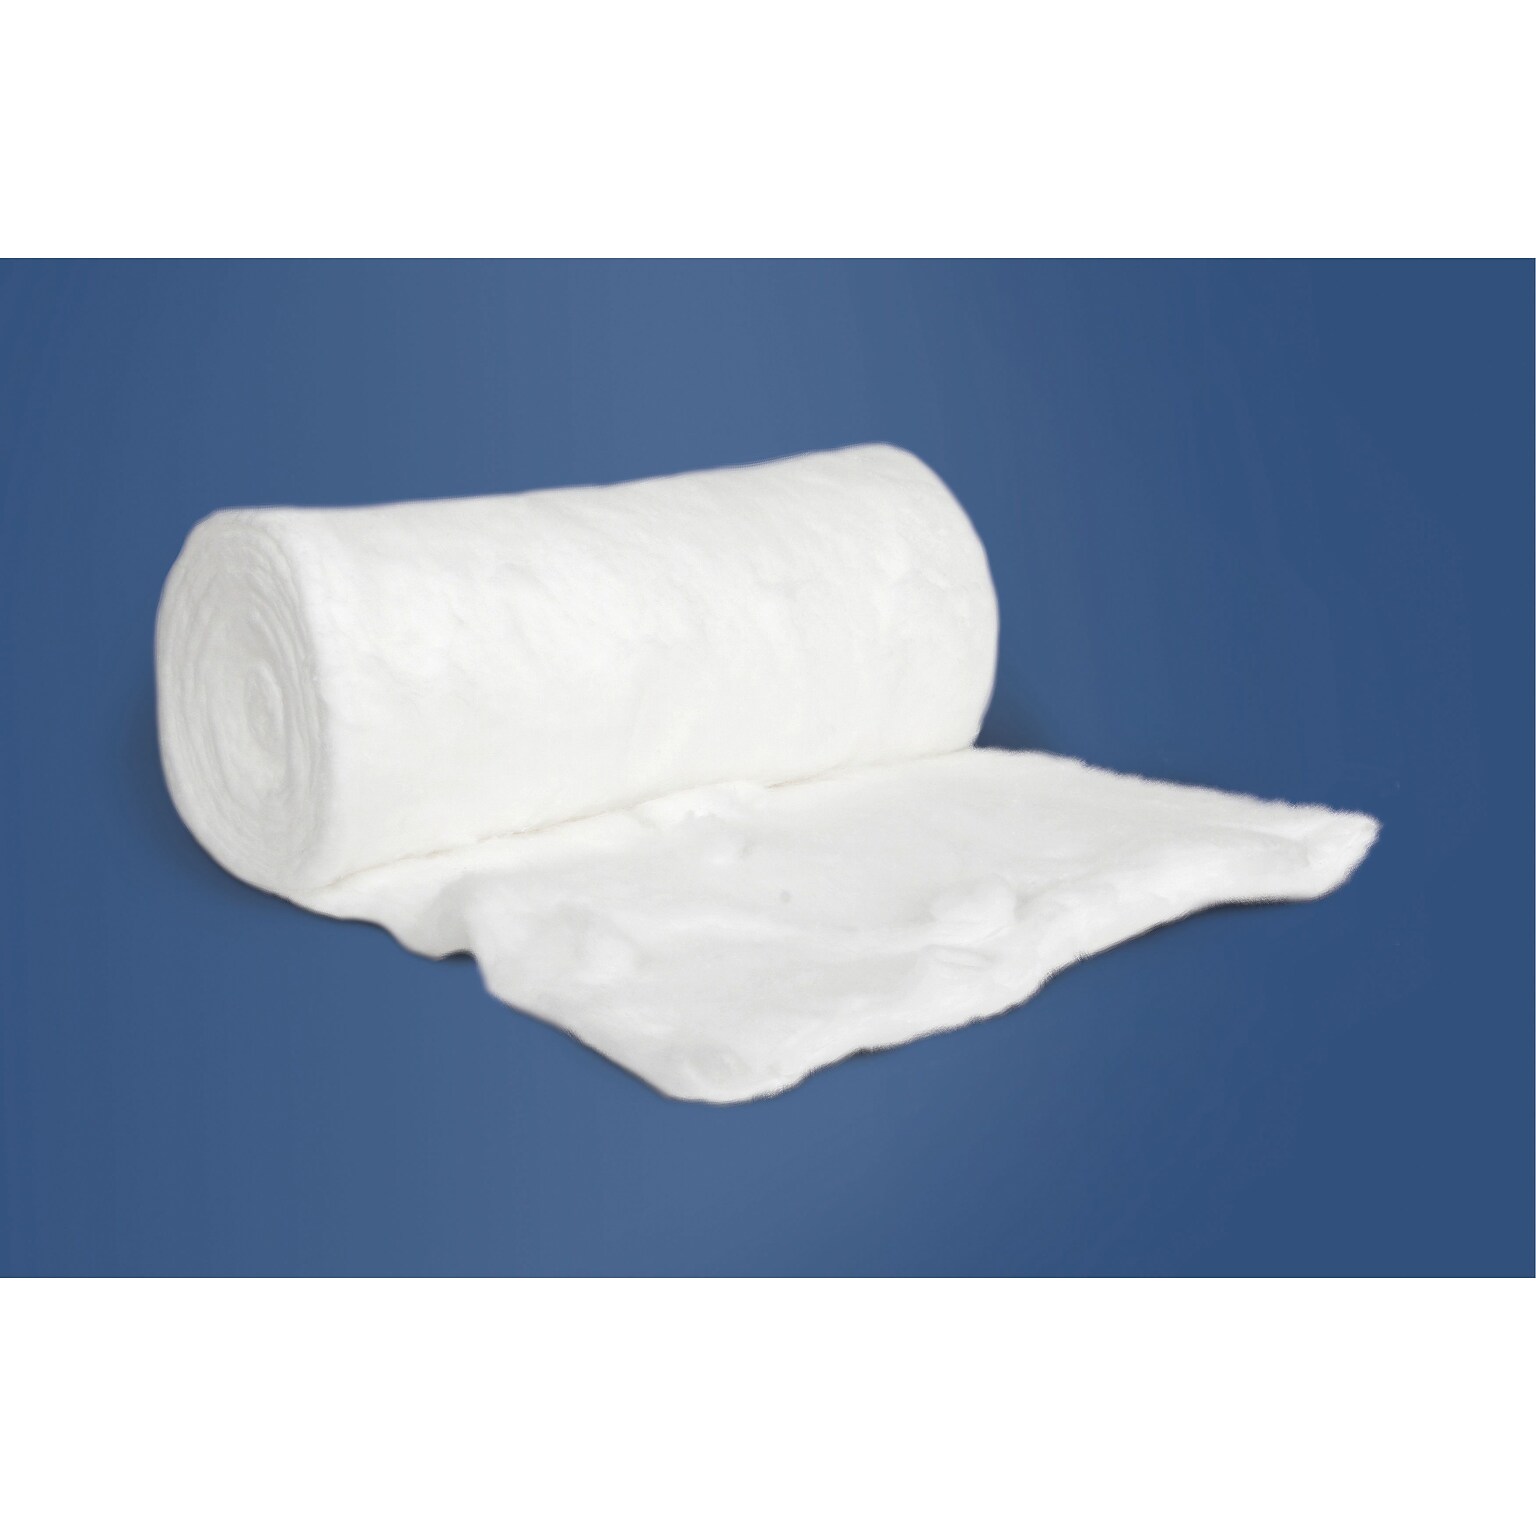 Medline Non-sterile Cotton Rolls, 1 lb, 25/Pack